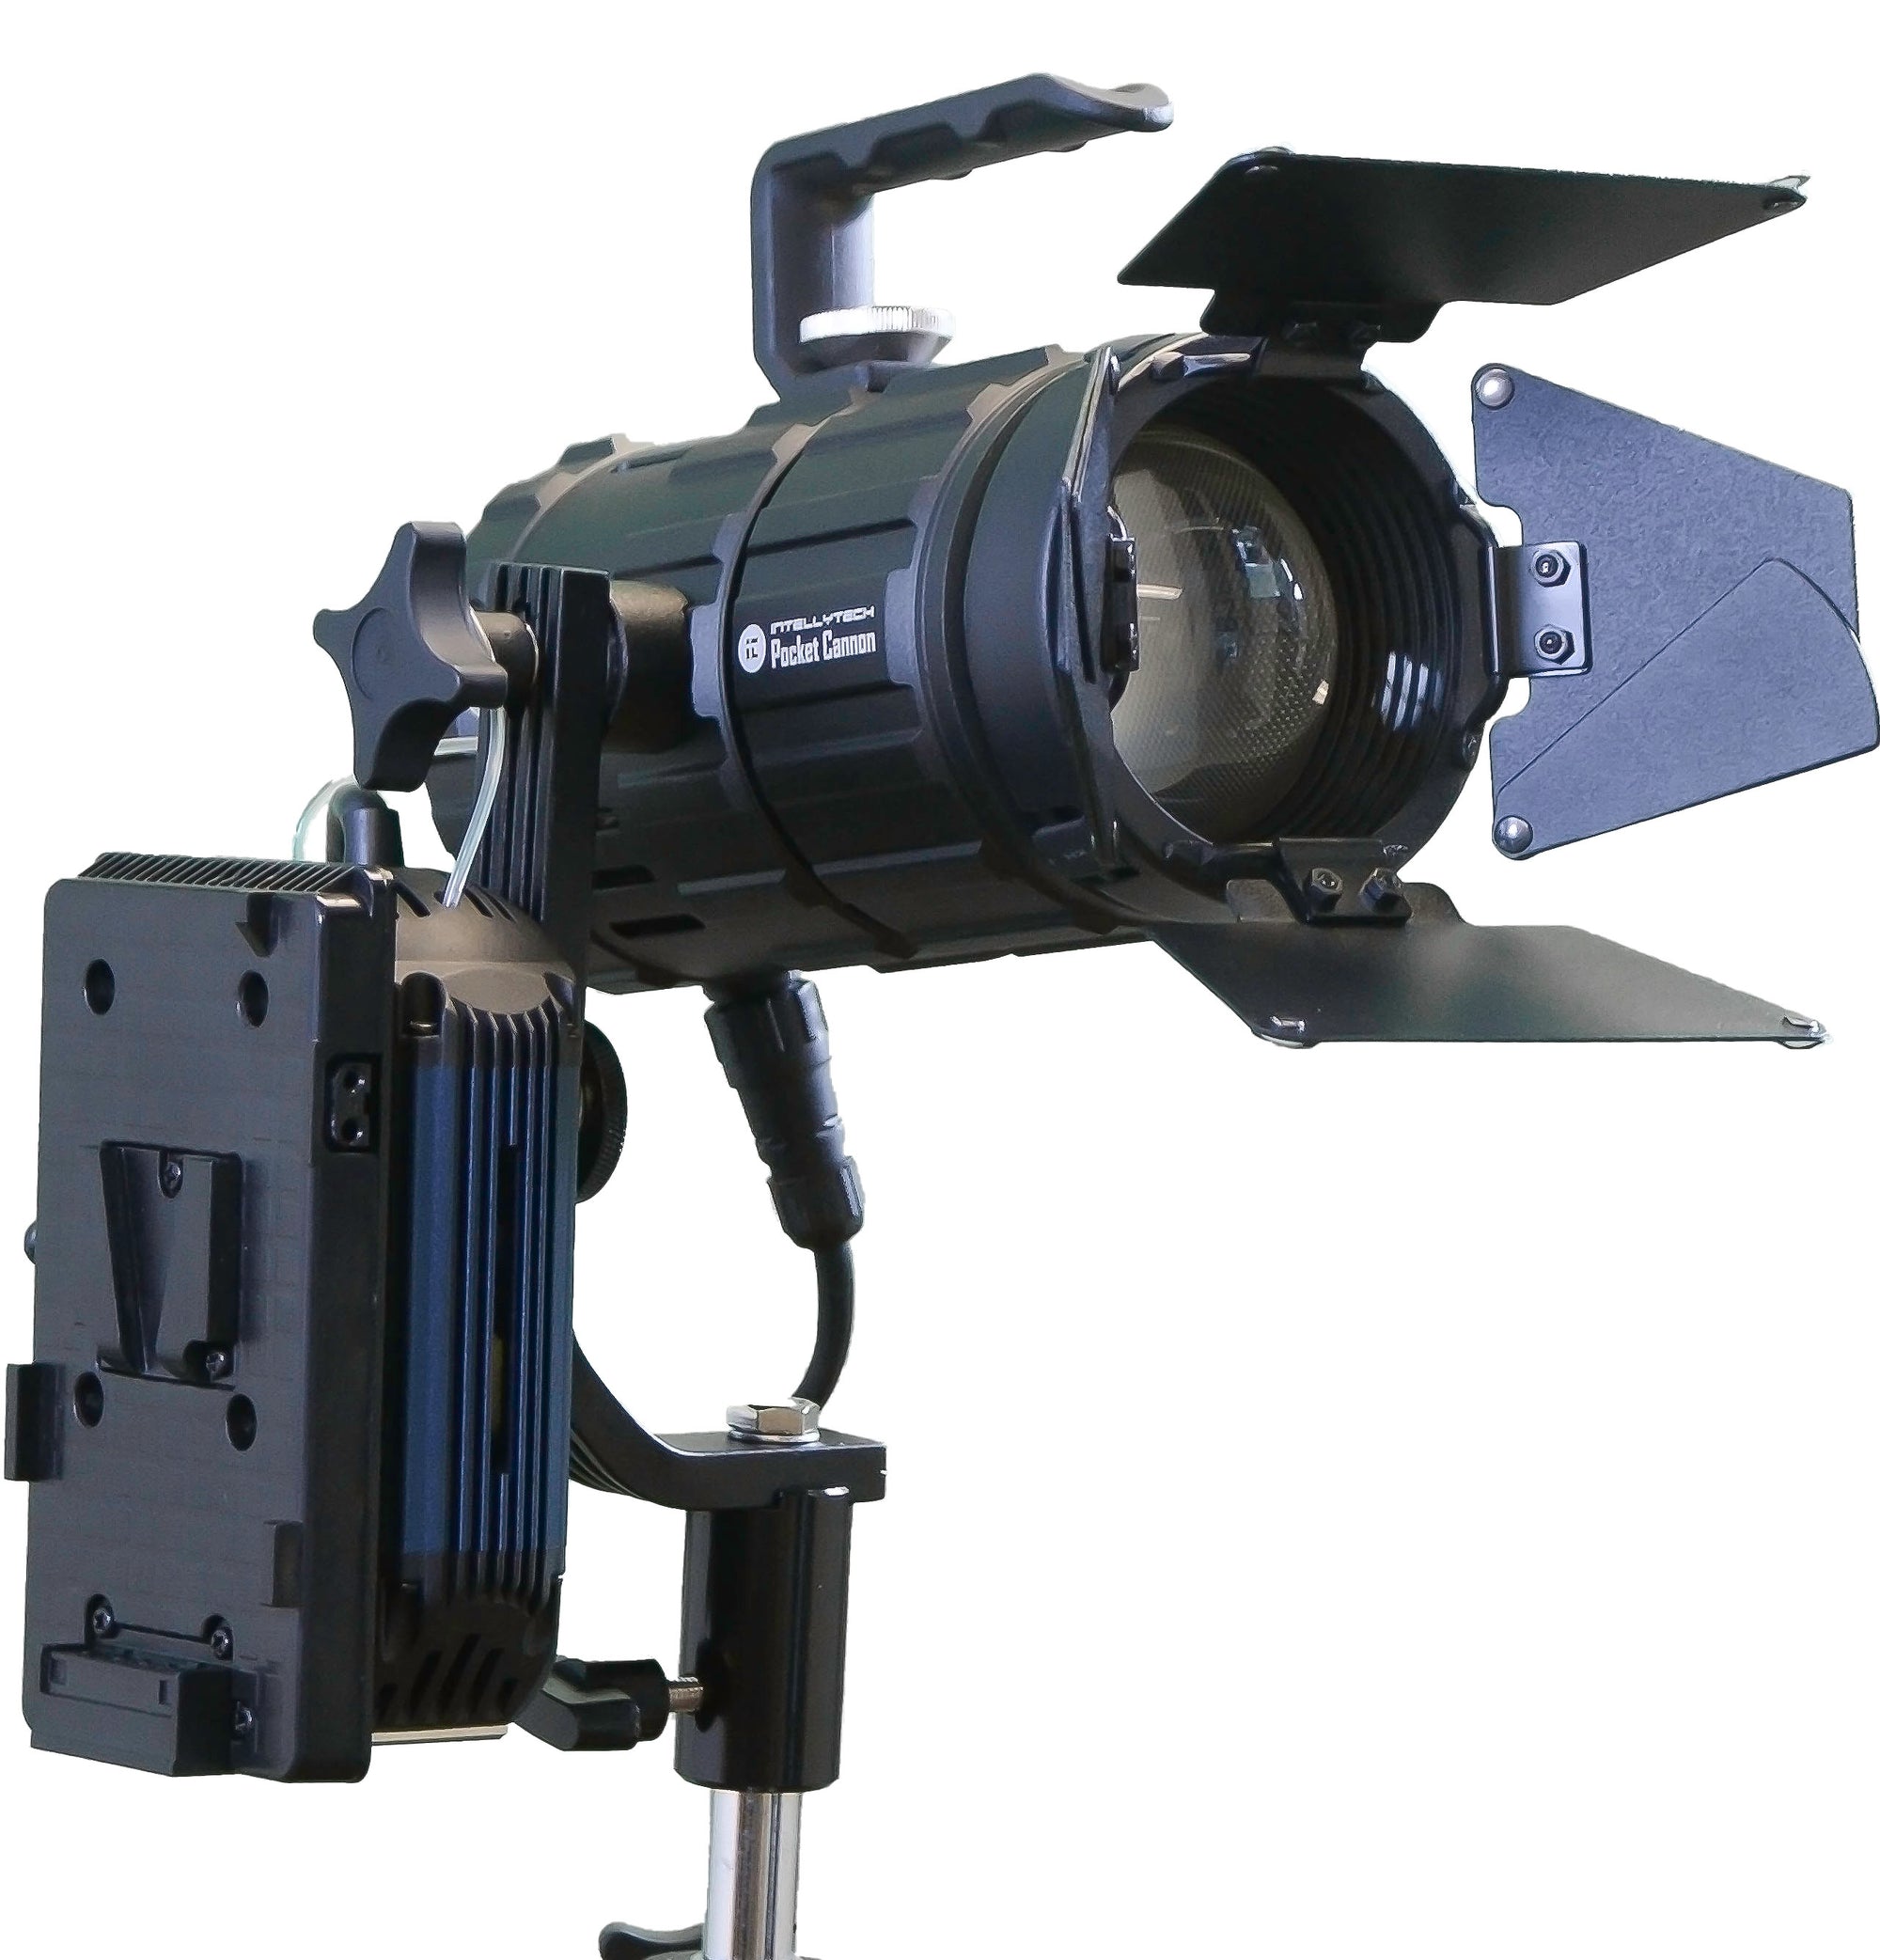 Pocket Cannon - Focusable LED Fresnel - 2 Light Kit